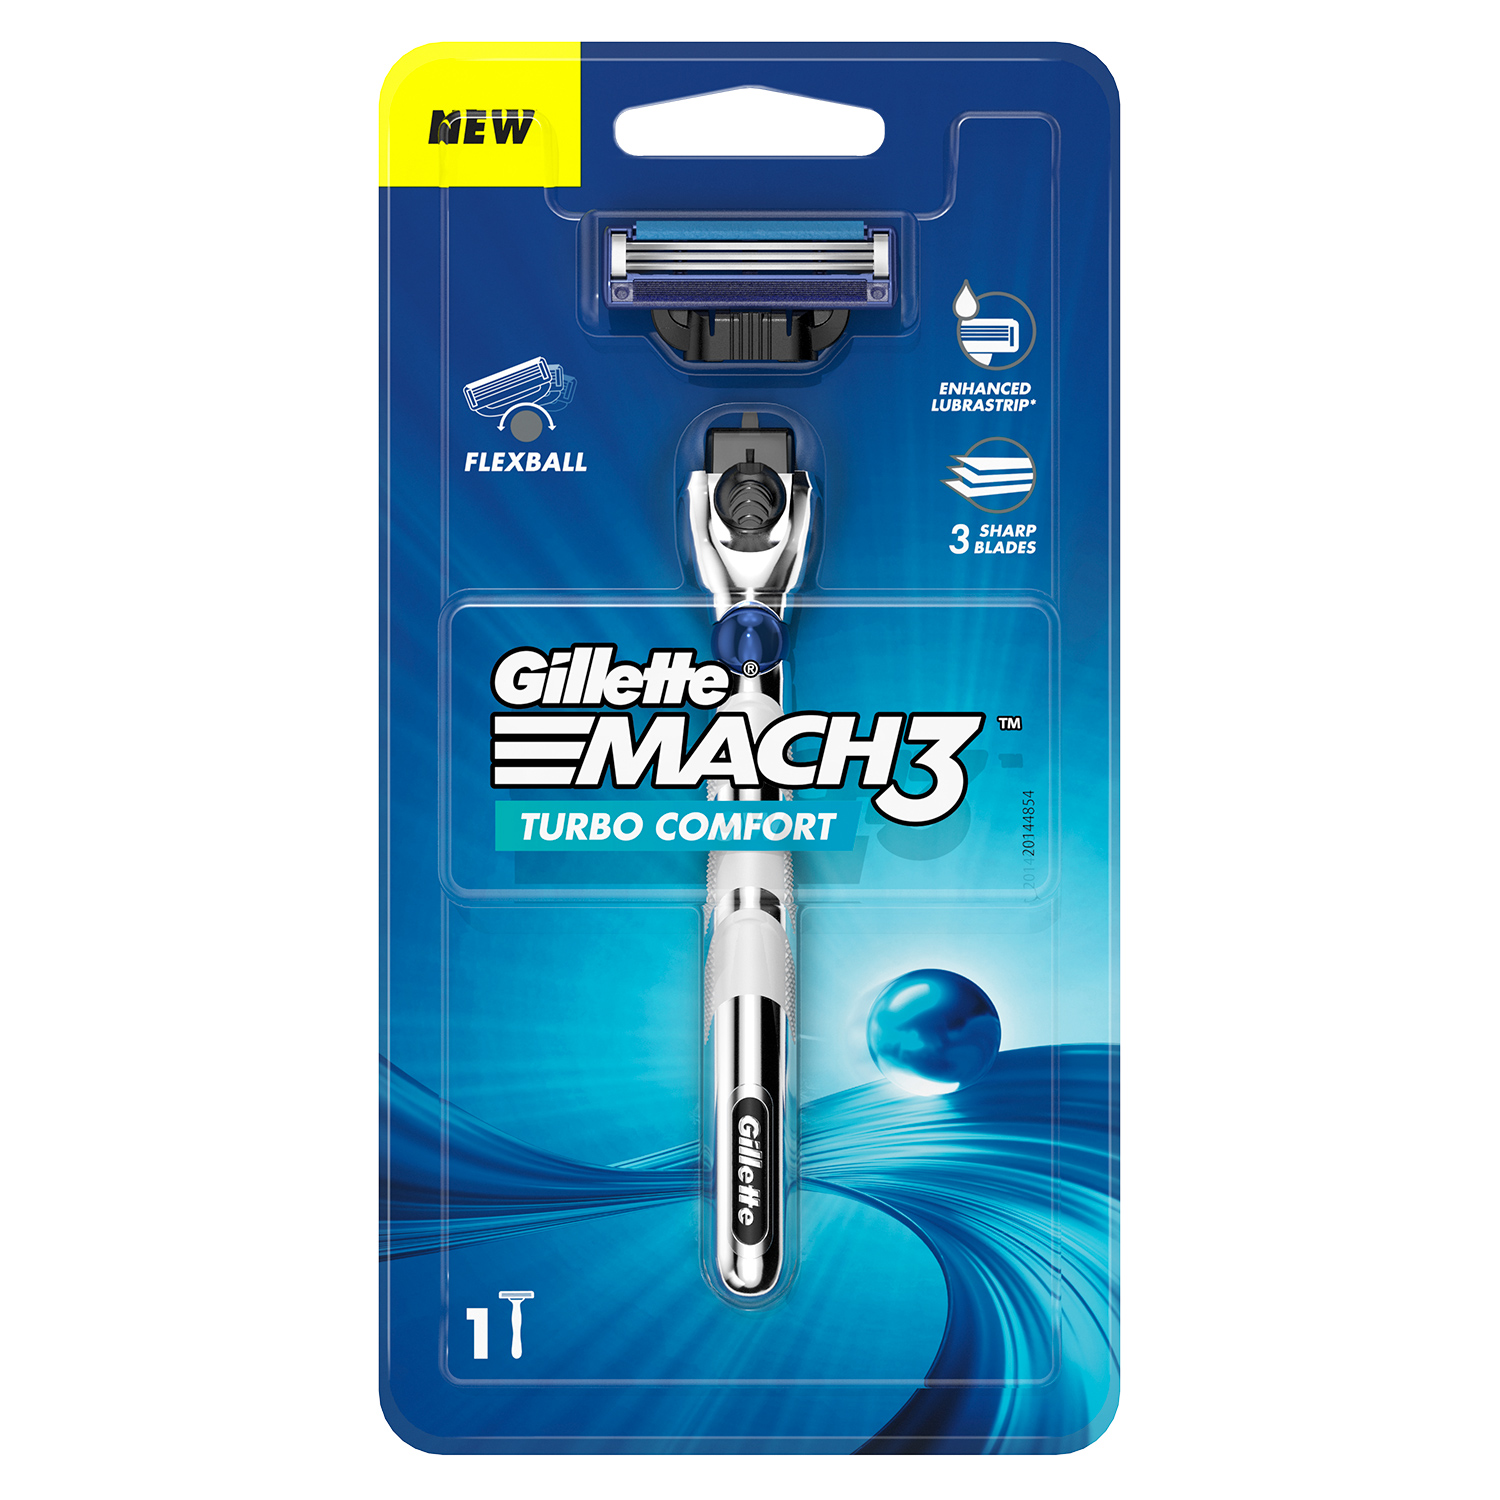 Gillette Mach3 Turbo Men’s Razor with Flexball Technology